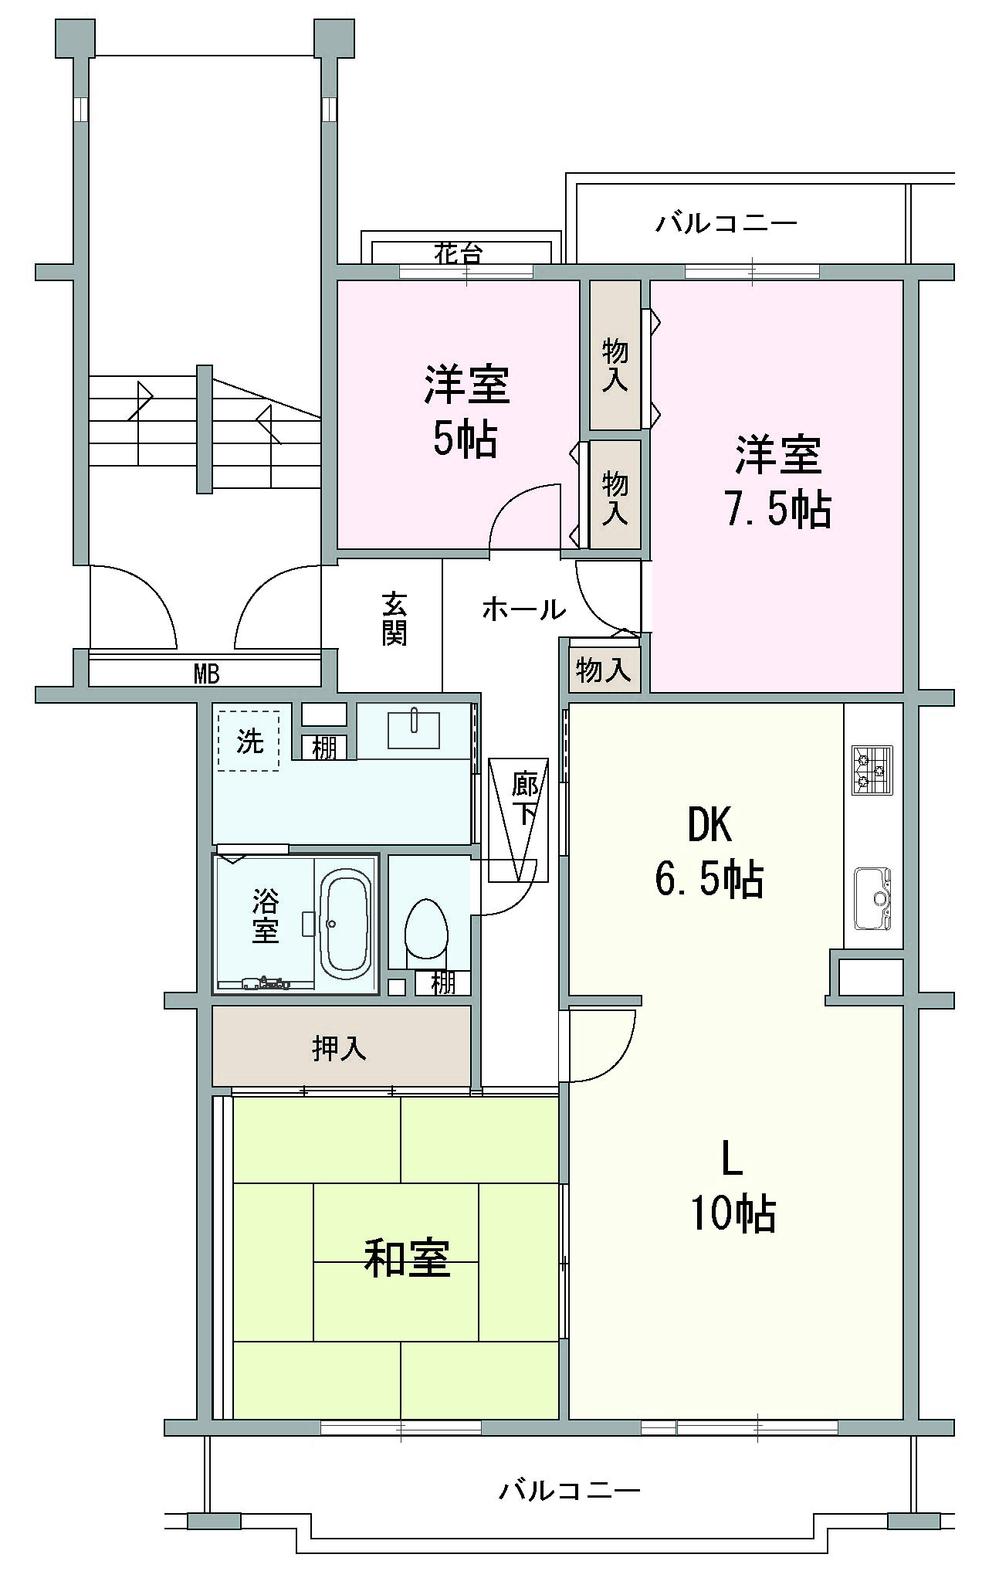 Floor plan. 3LDK + S (storeroom), Price 12 million yen, Occupied area 90.74 sq m , Balcony area 13.31 sq m attic storeroom (3.42 square meters) with apartment